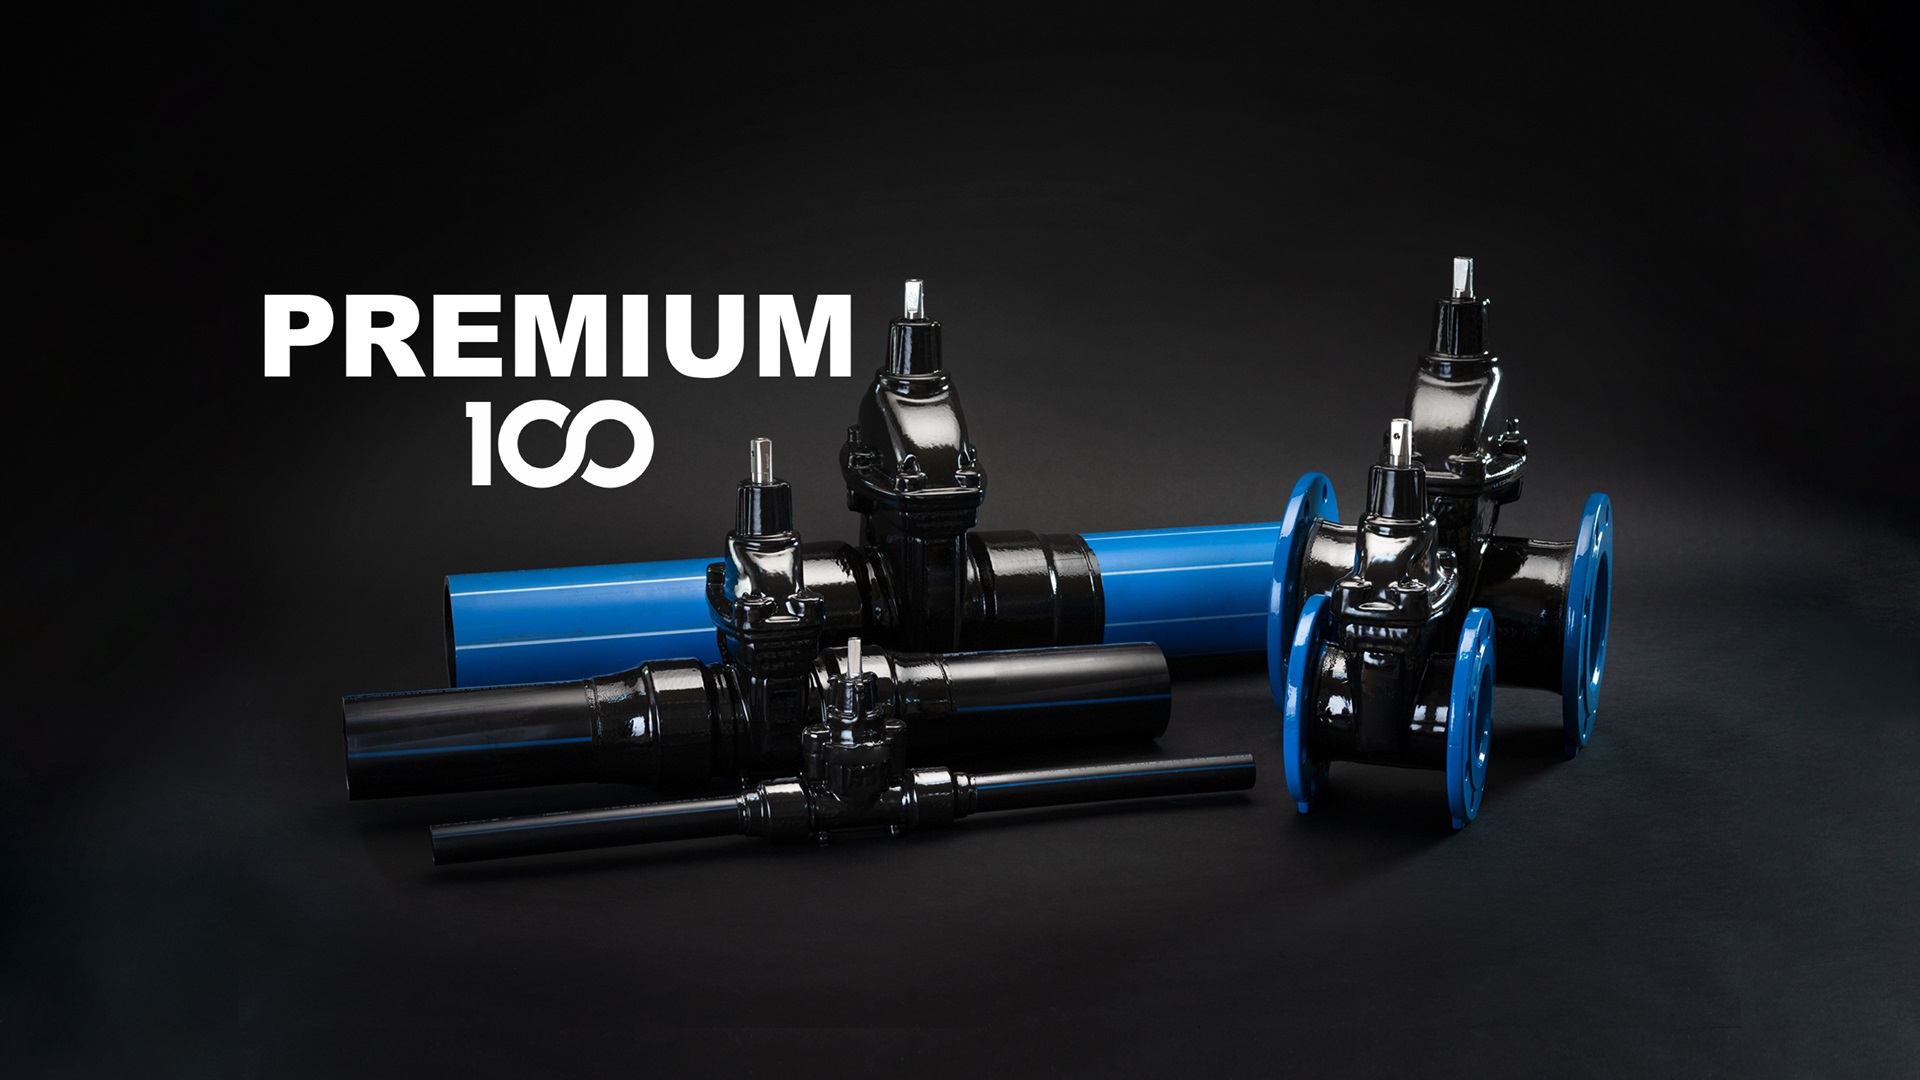 AVK Premium 100 valves are built to last a century